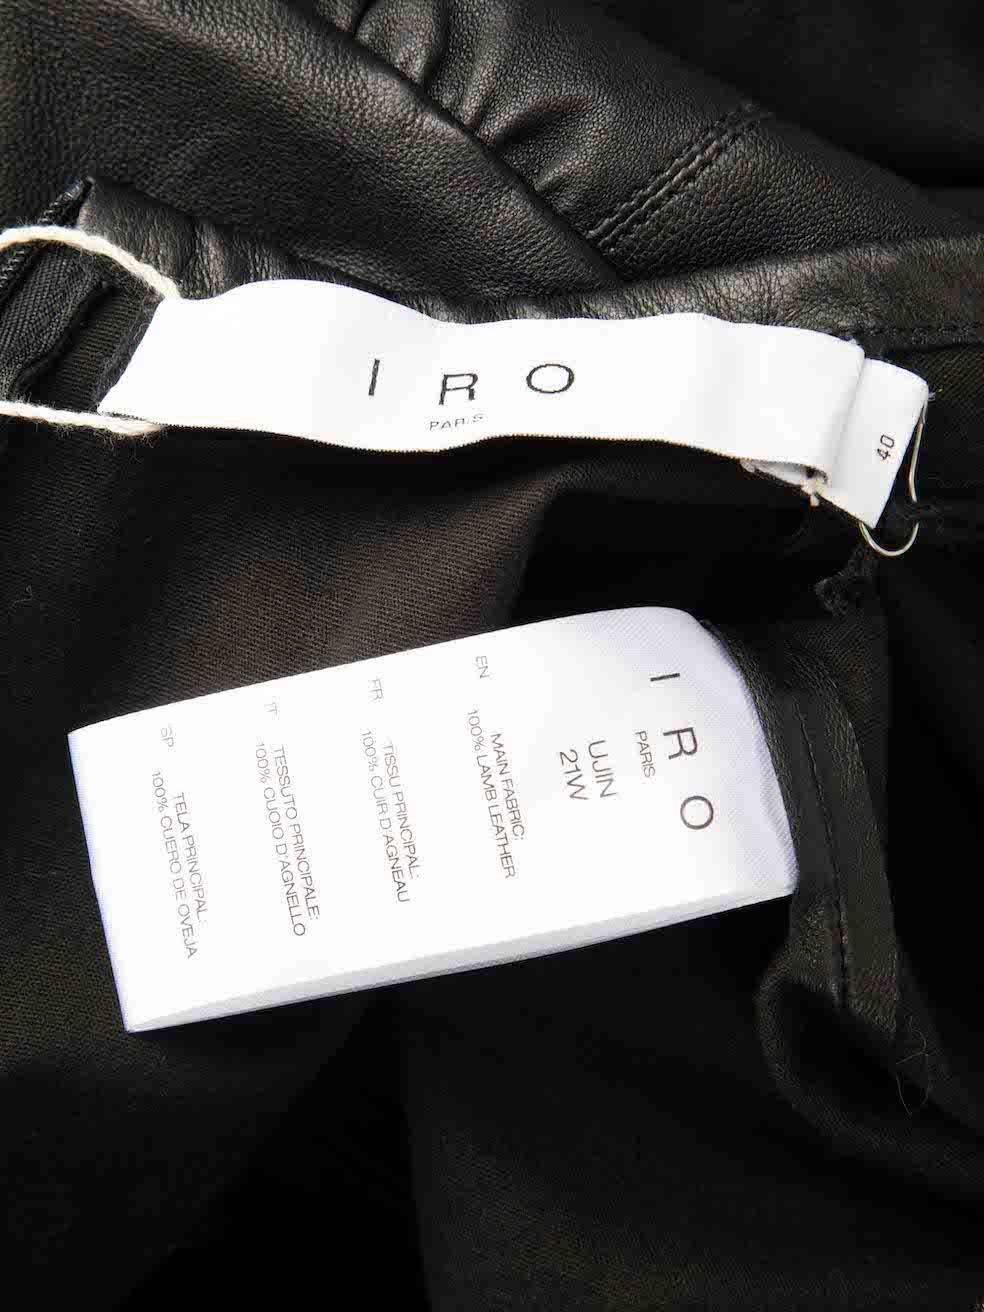 Women's Iro AW/21 Black Leather Mini Dress Size L For Sale